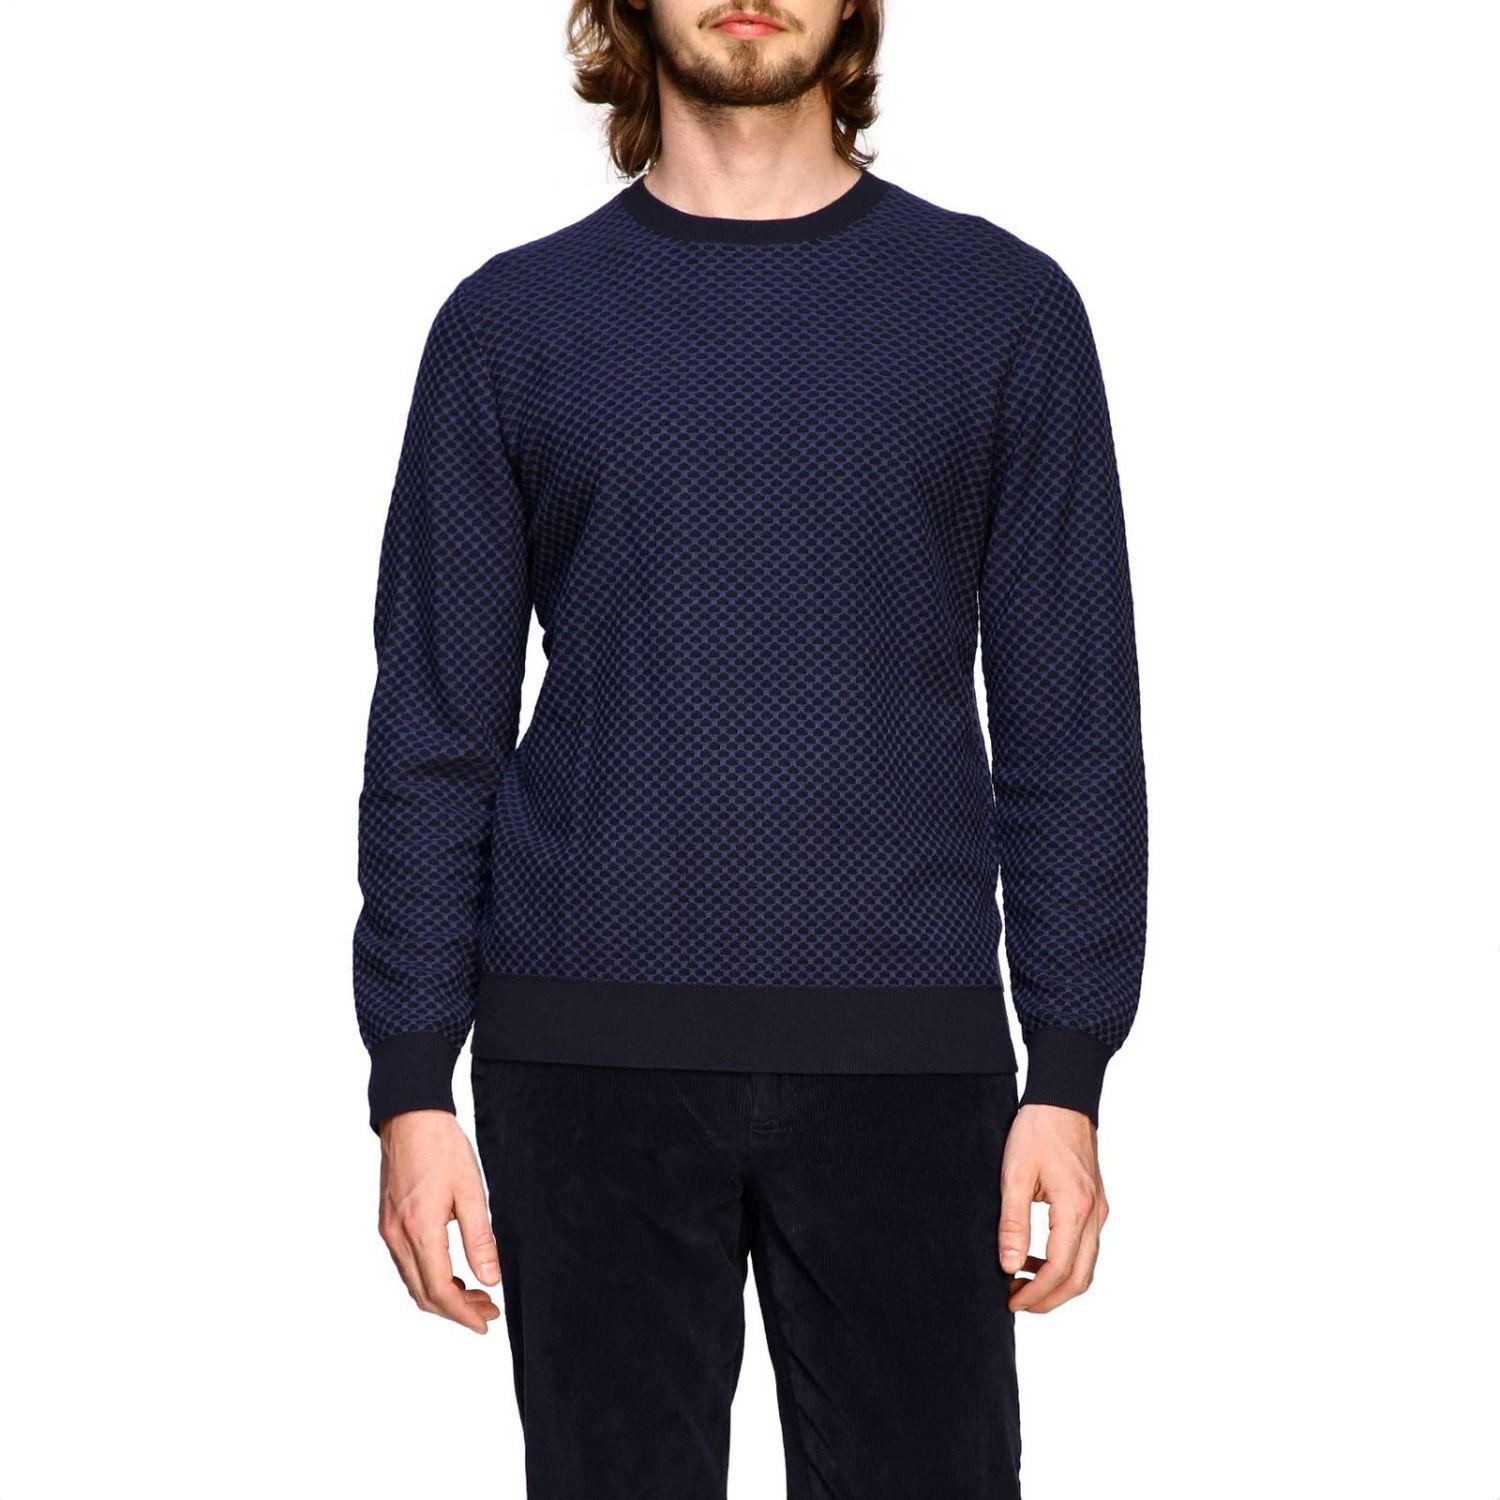 Armani Exchange Cotton Men's Sweater in Blue for Men - Lyst